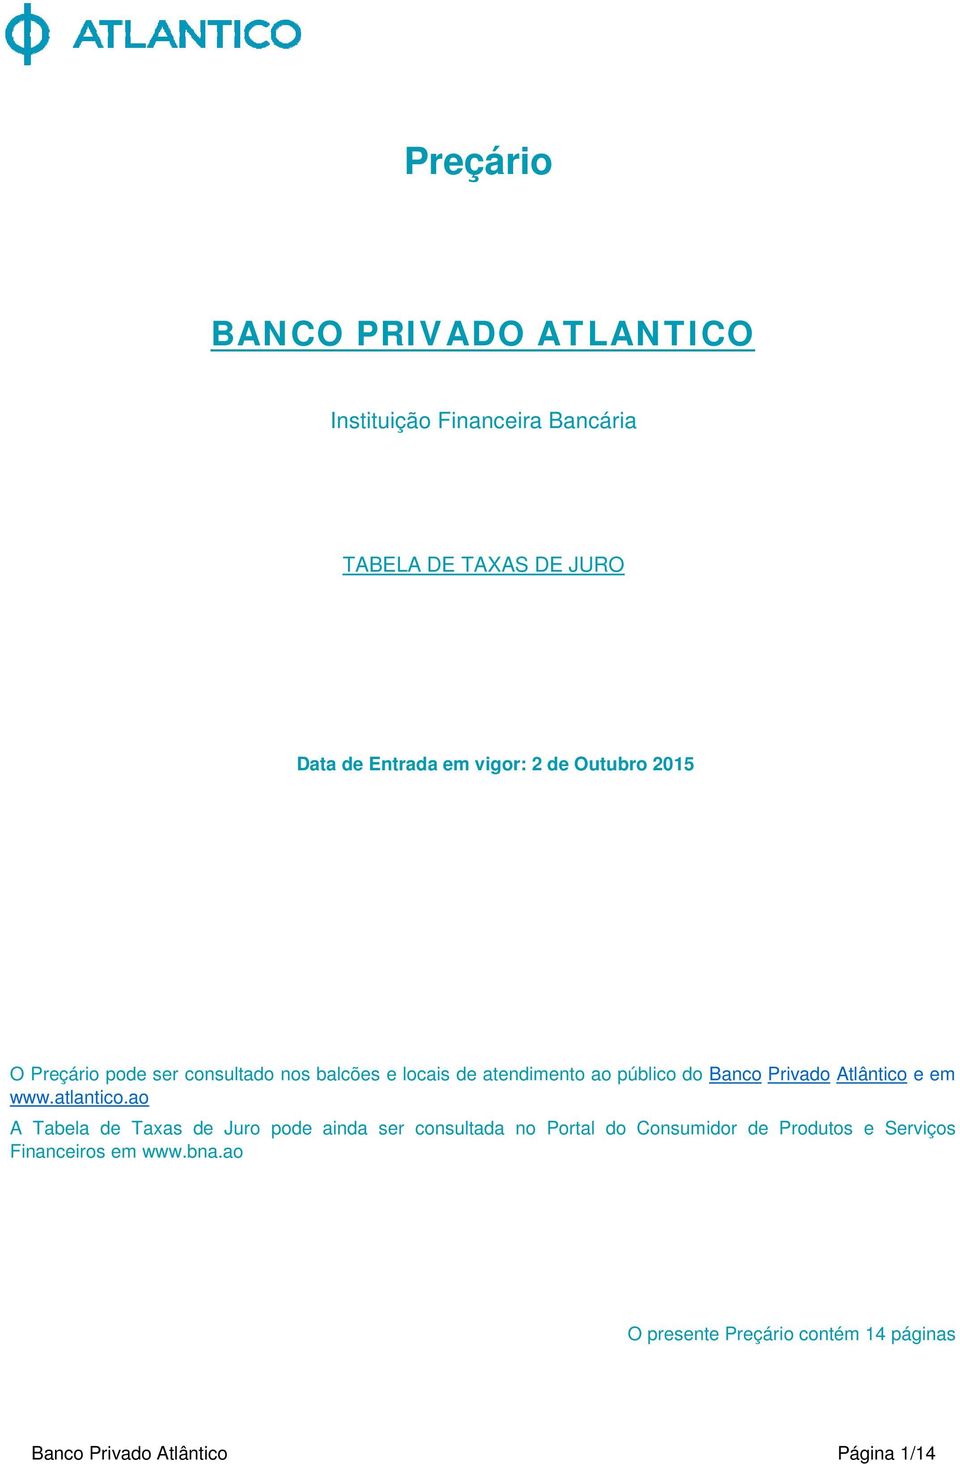 Atlântico eem www.atlantico.